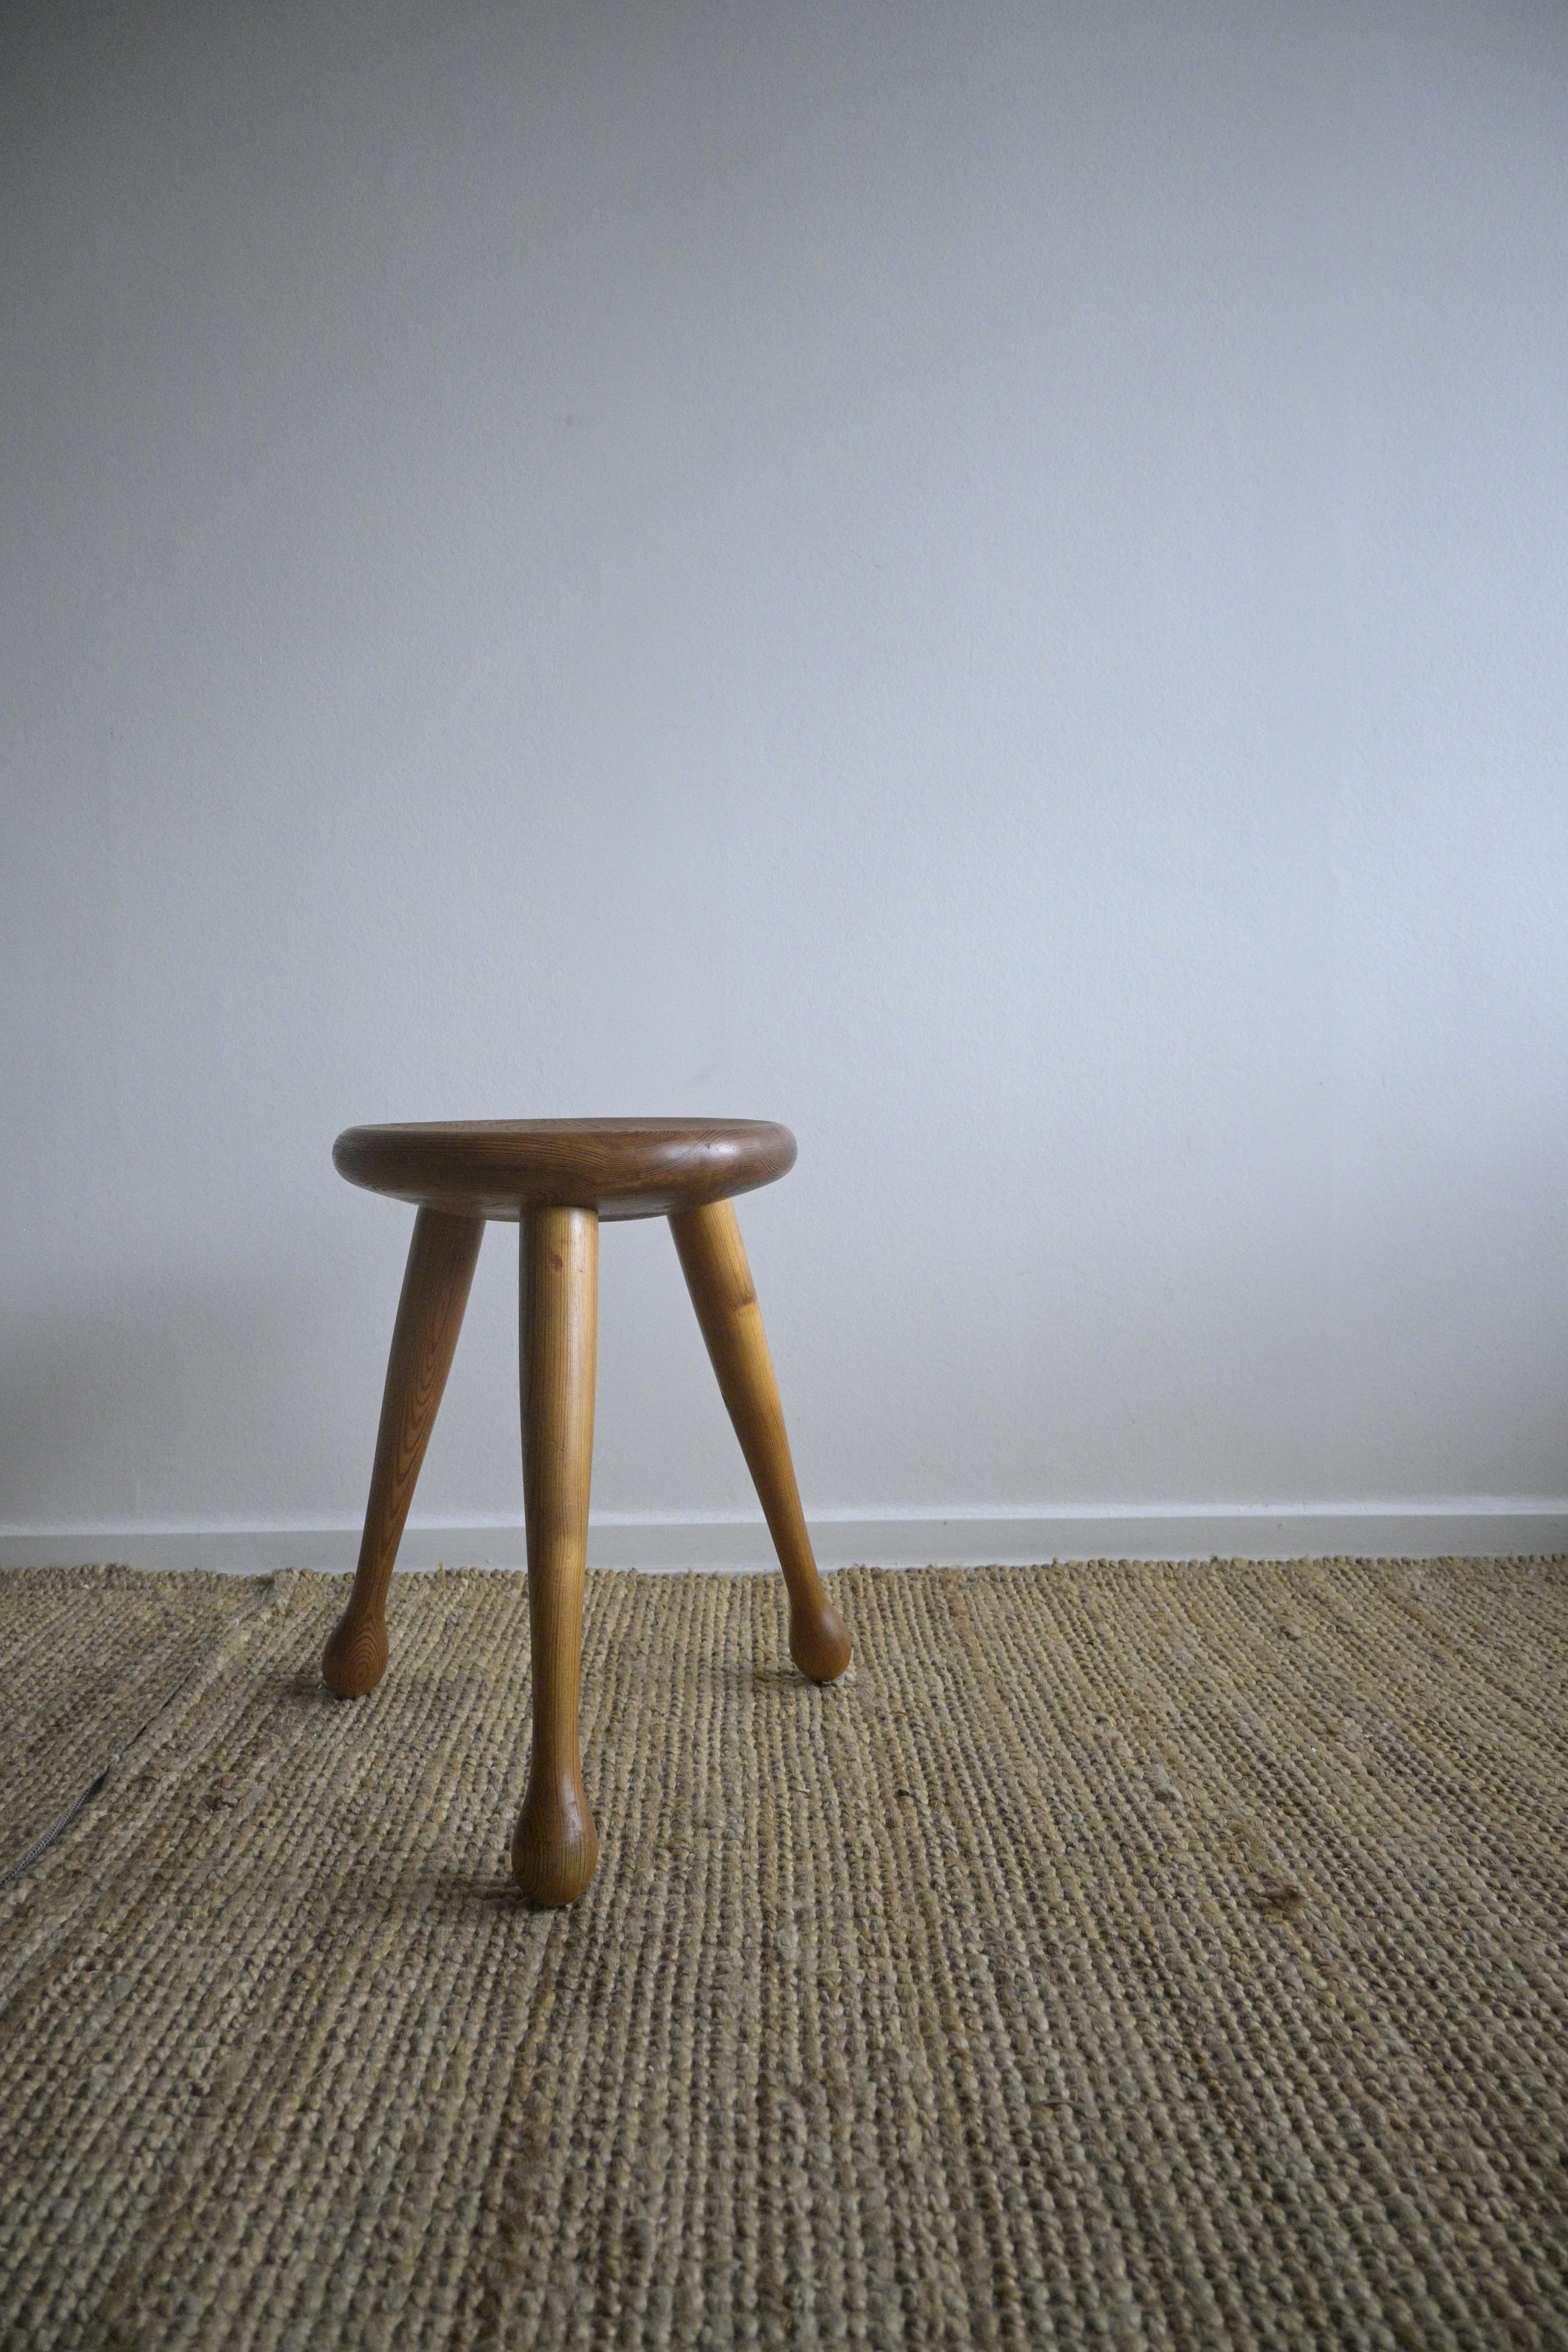 A pine stool produced by Möbelkompaniet Ahl & Wahlén, Sweden, 1960


Heigth: 42 cm/16.5 inch
Diameter: 29 cm/11.4 inch
